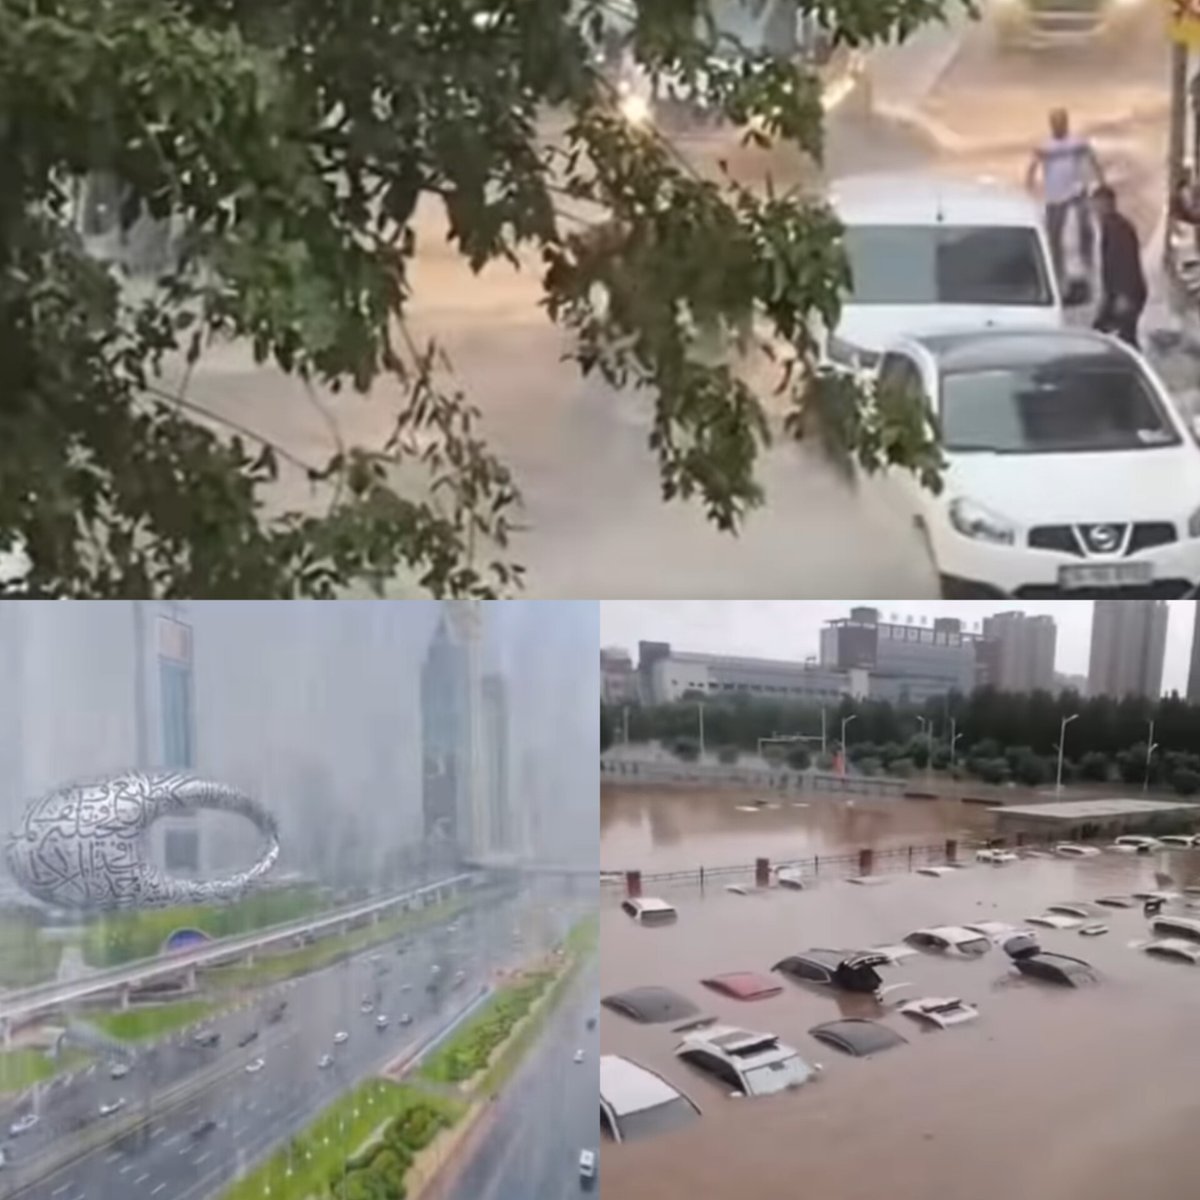 اسلام و علیکم! Heavy rains in Dubai fear of major damage!!! دبئي ۾ زبردست برسات بڙي نقصان کا انديشا!!! #الهلال_العين #دبي_الان #Dubai